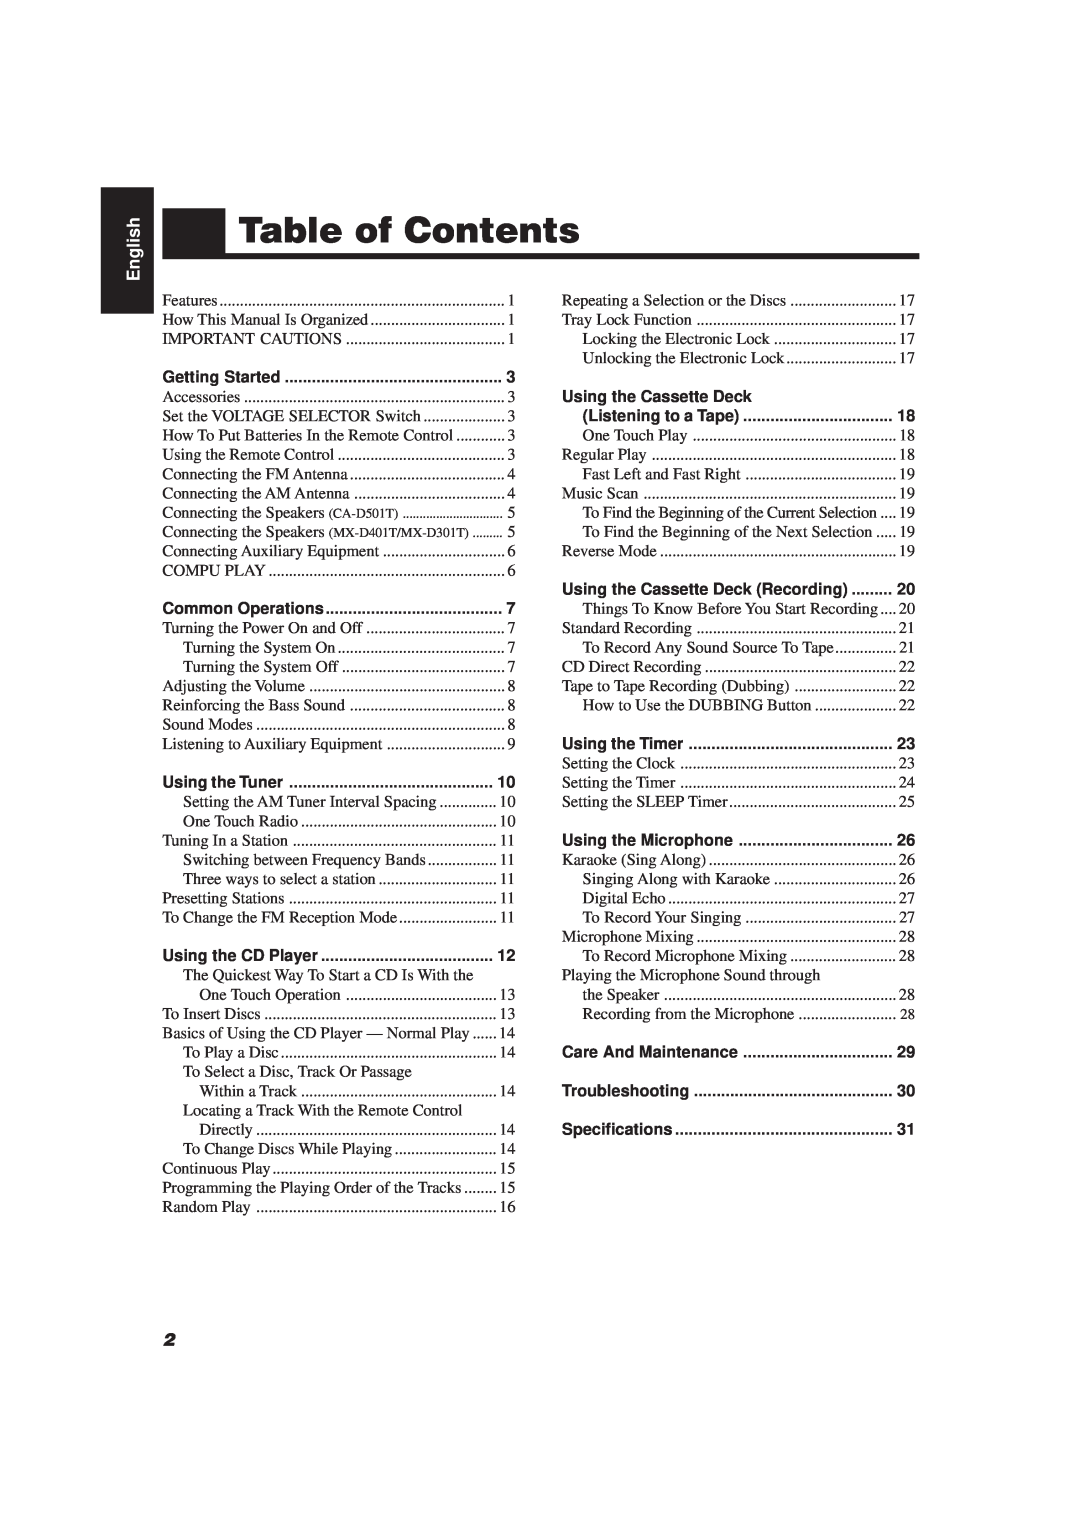 JVC MX-D401T, MX-D301T, CA-D501T manual Table of Contents, English 